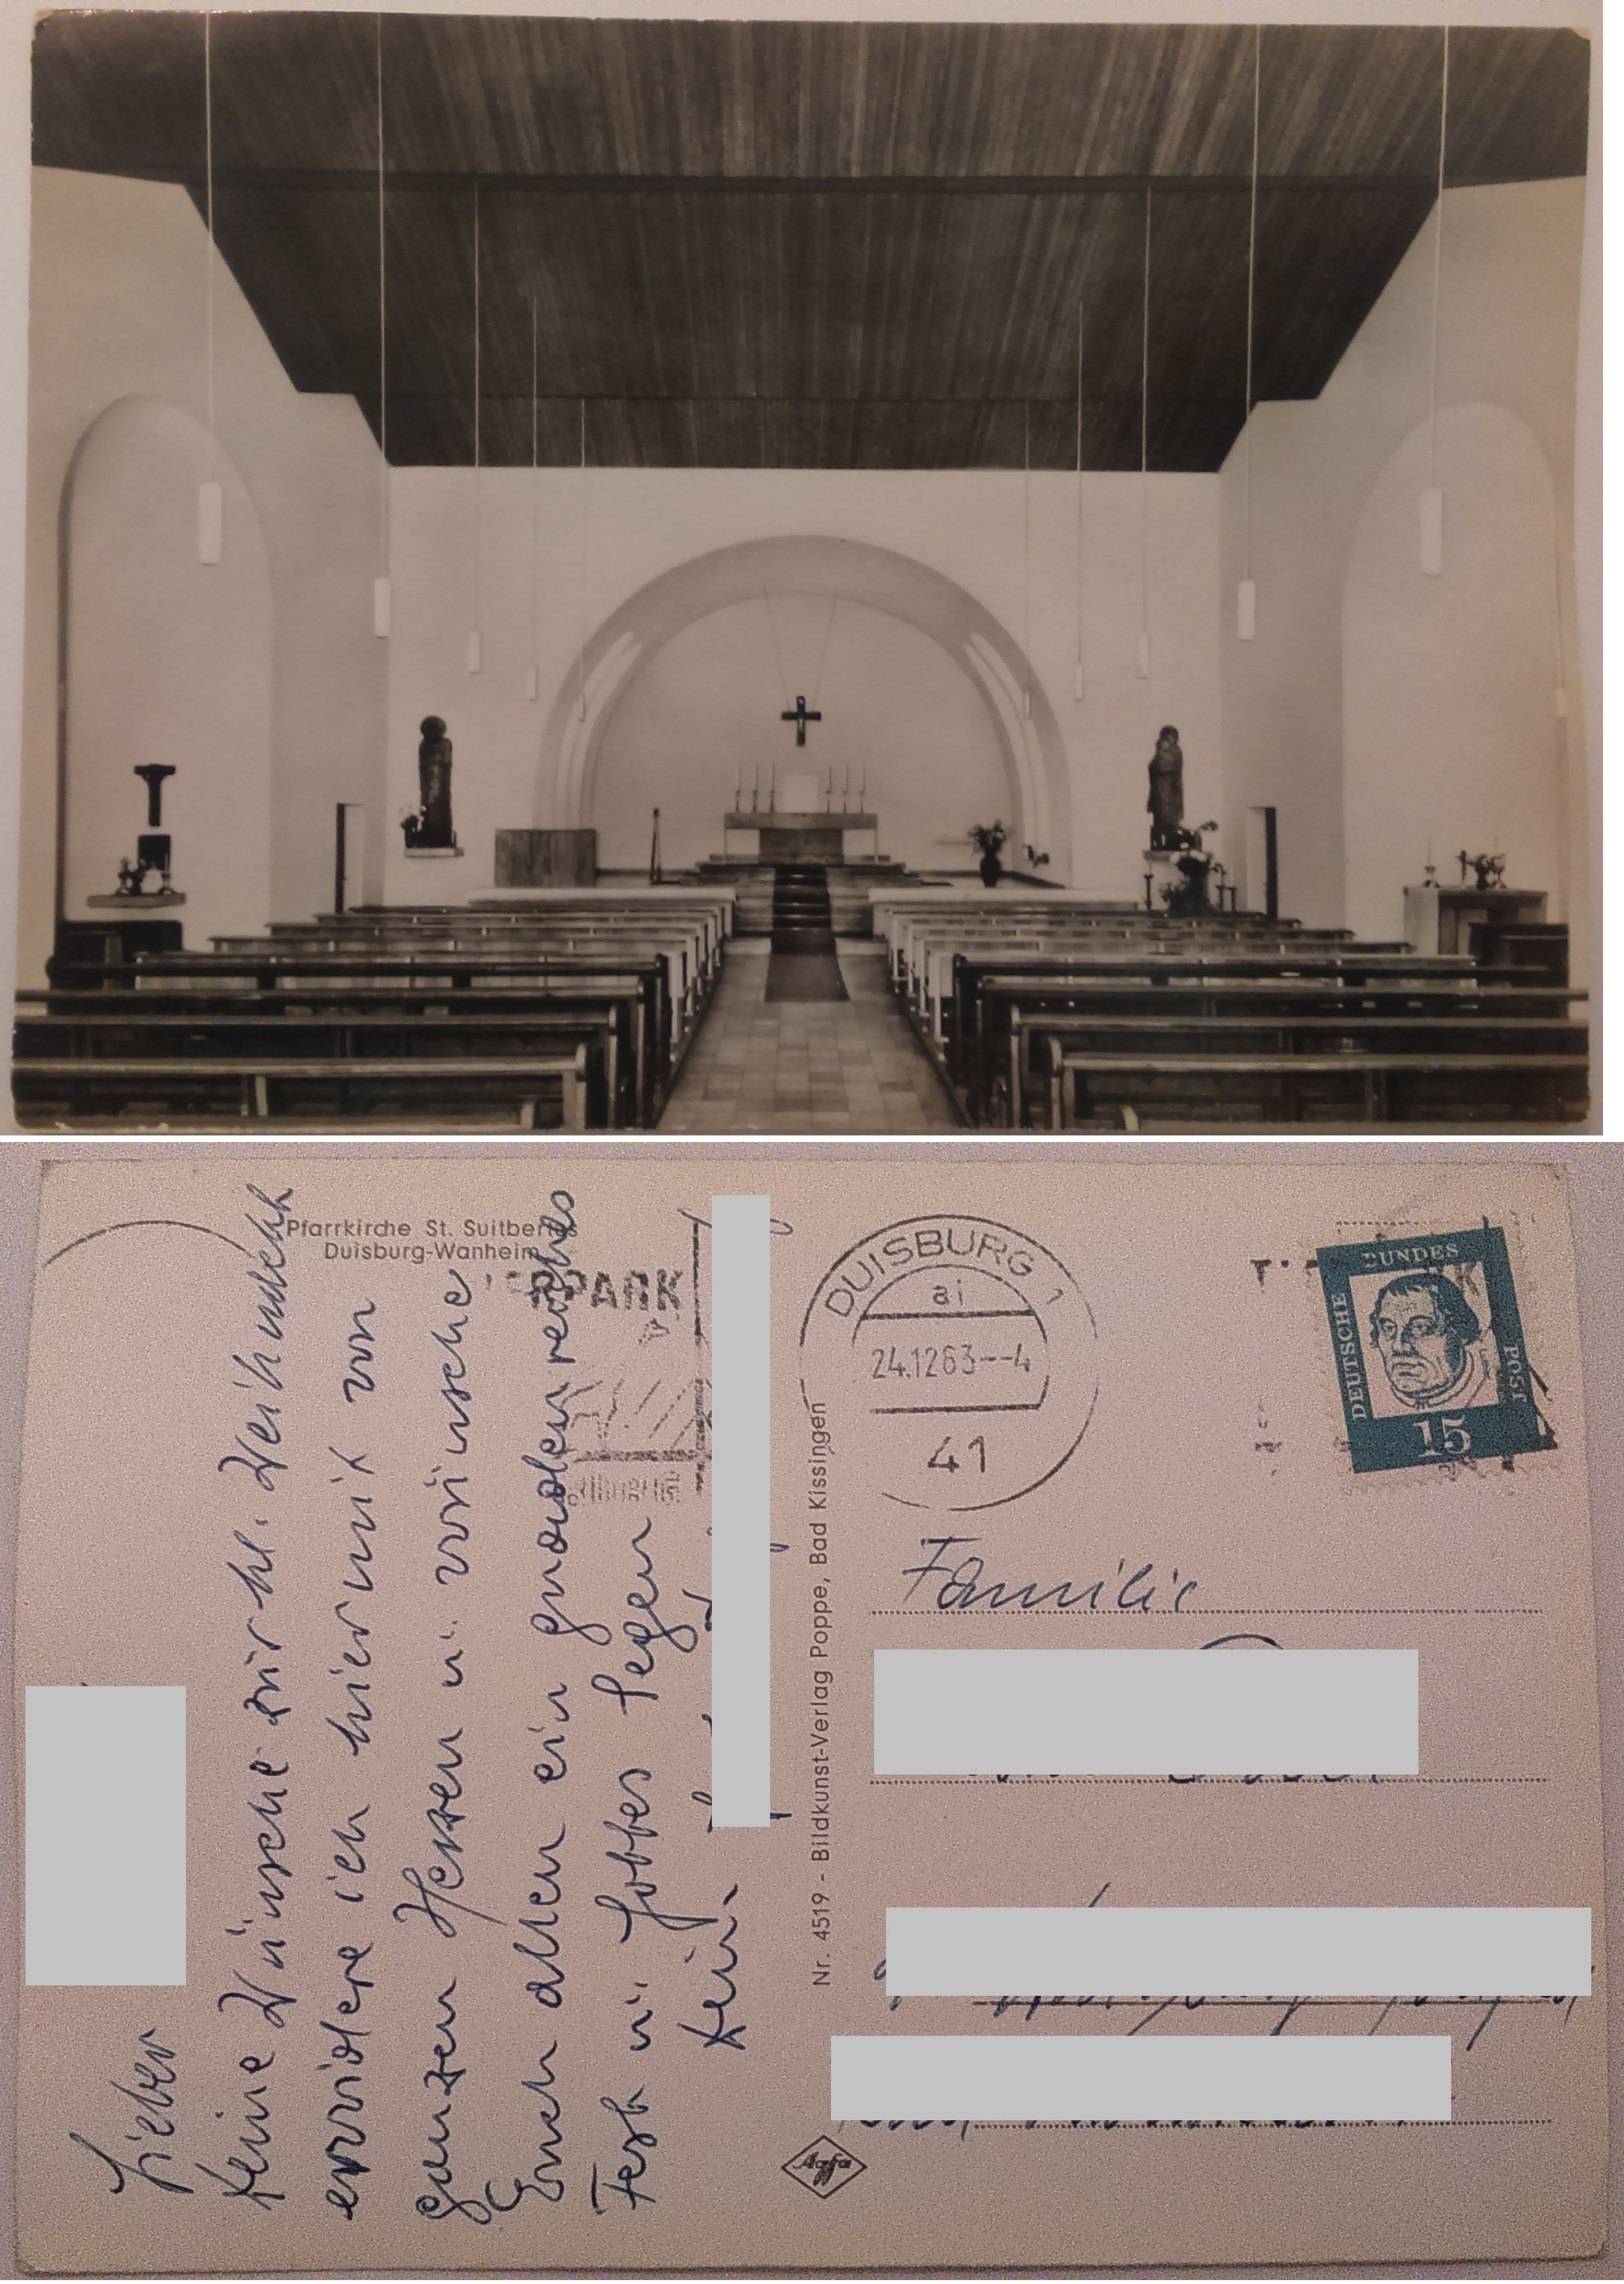 Pfarrkirche St. Suitbertus Duisburg-Wanheim (24.12.1963) both